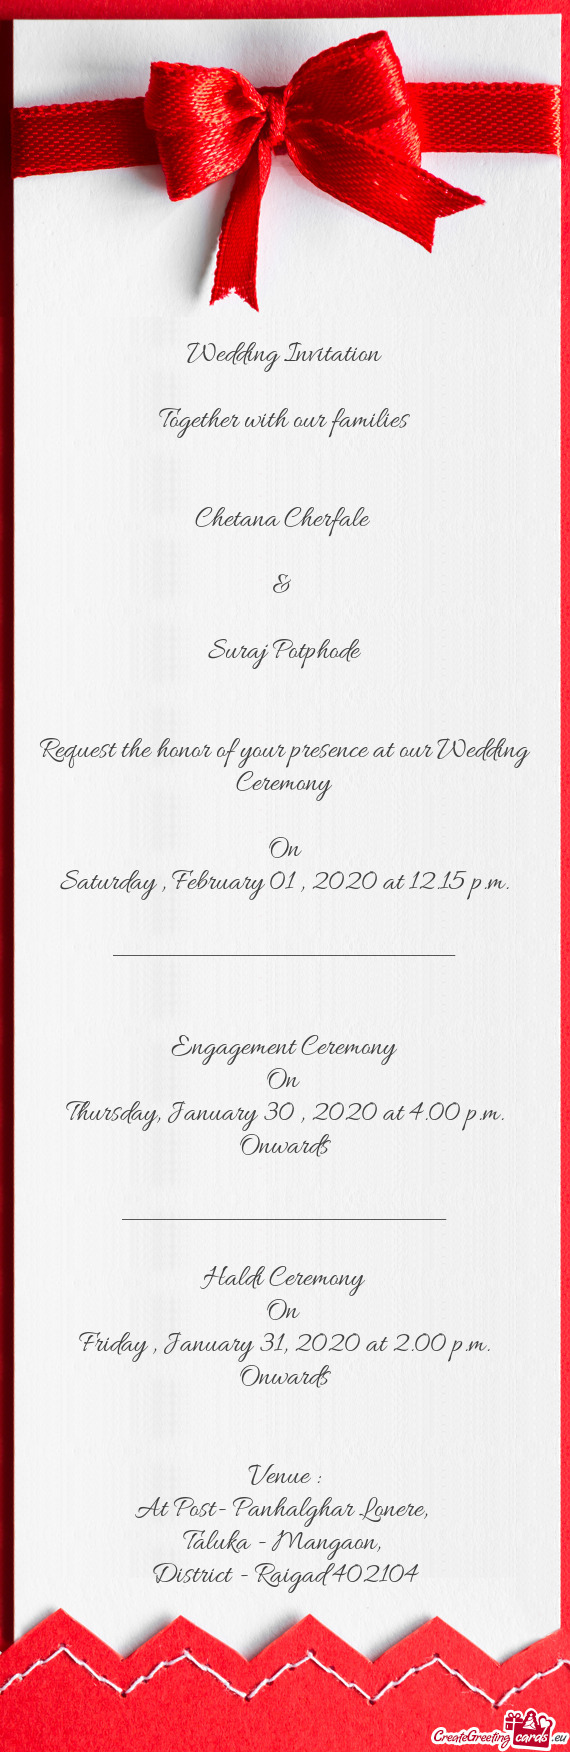 Engagement Ceremony
 On 
 Thursday